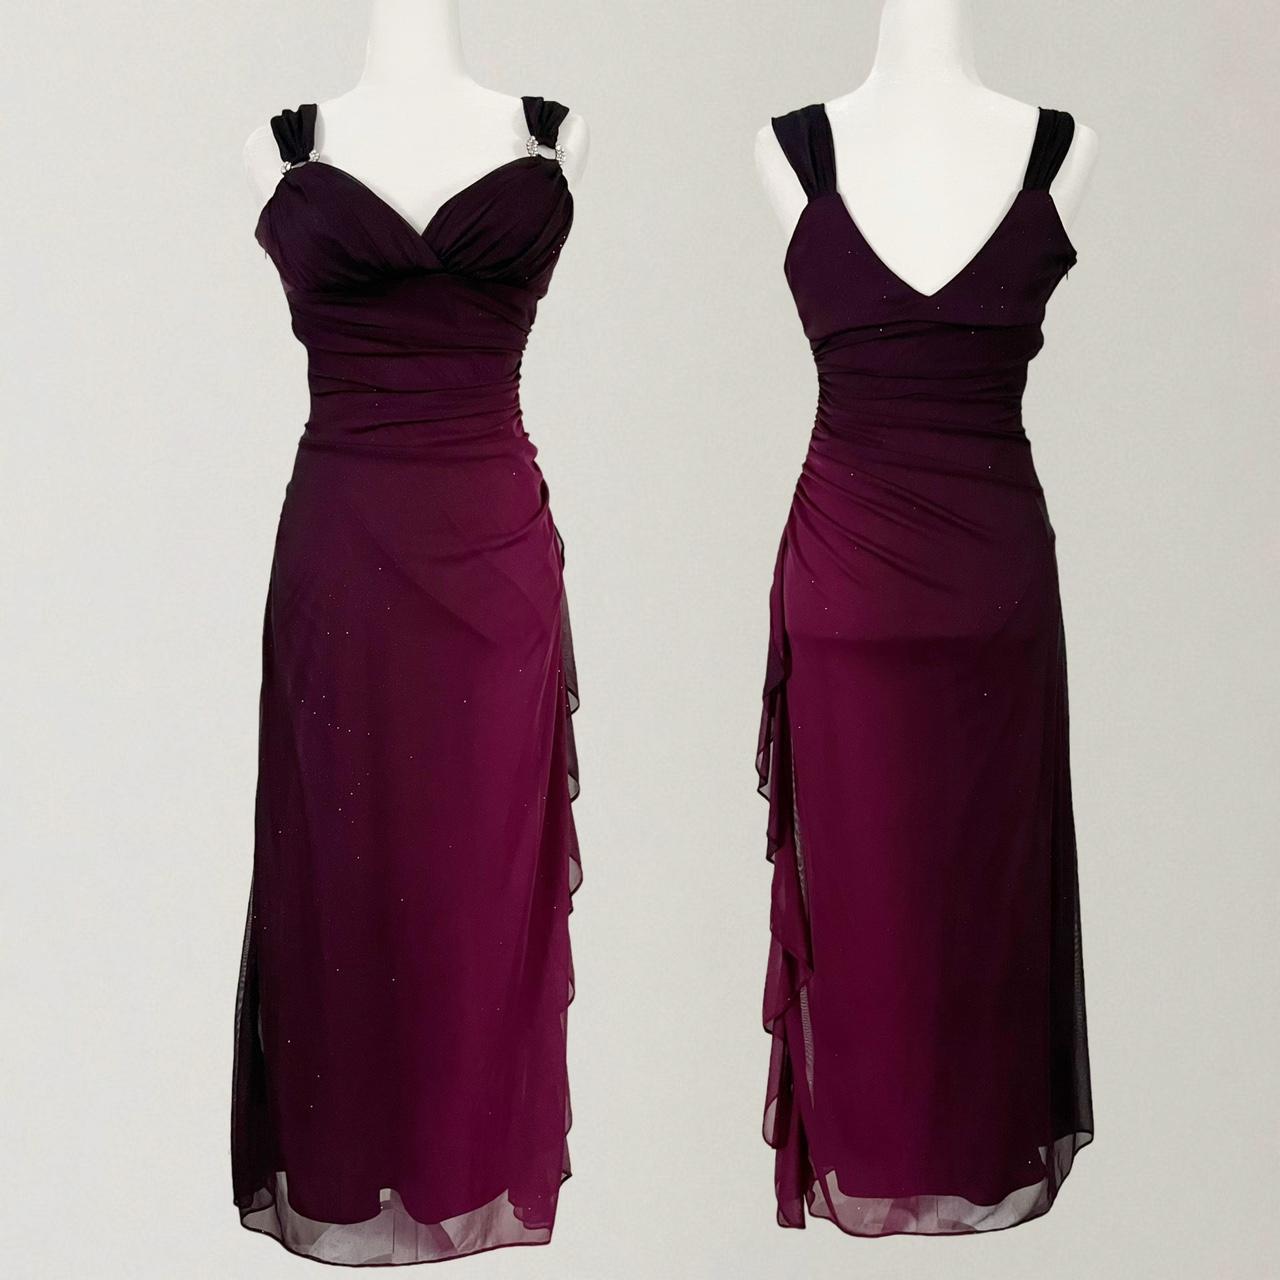 Betsy & Adam Women's Burgundy and Purple Dress (2)